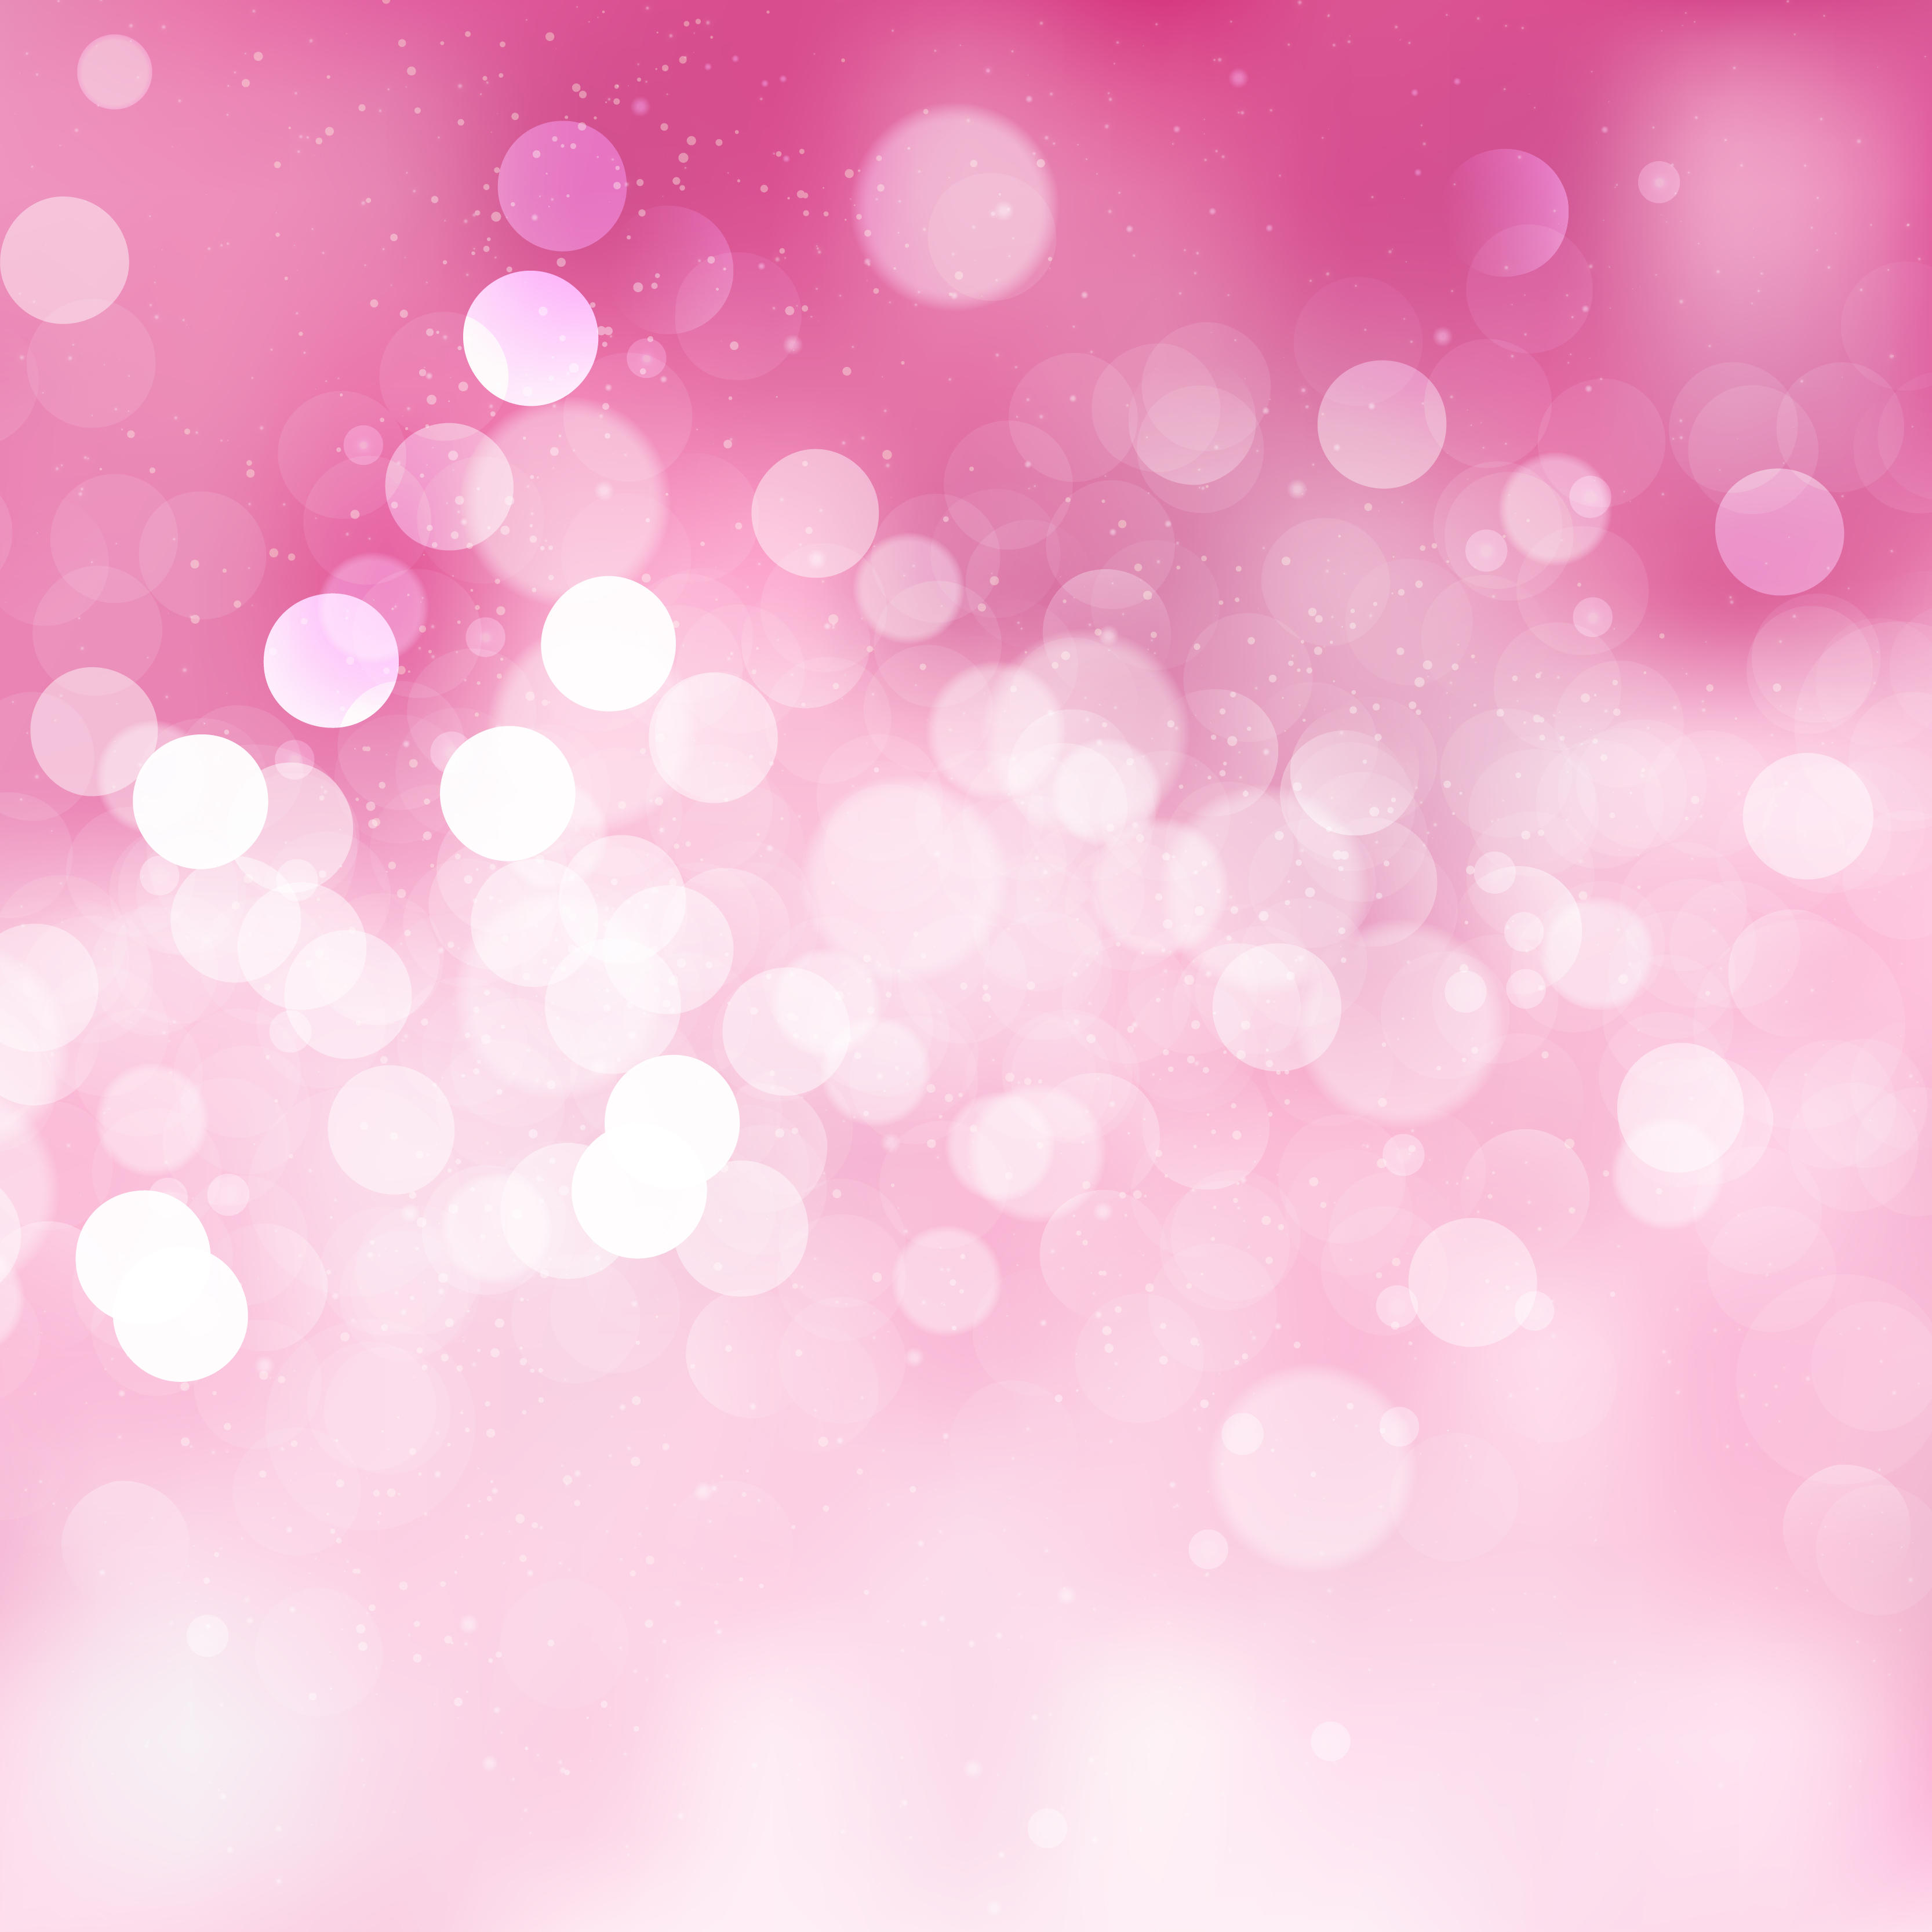 Abstract Light Pink Bokeh Backdrop | 123Freevectors